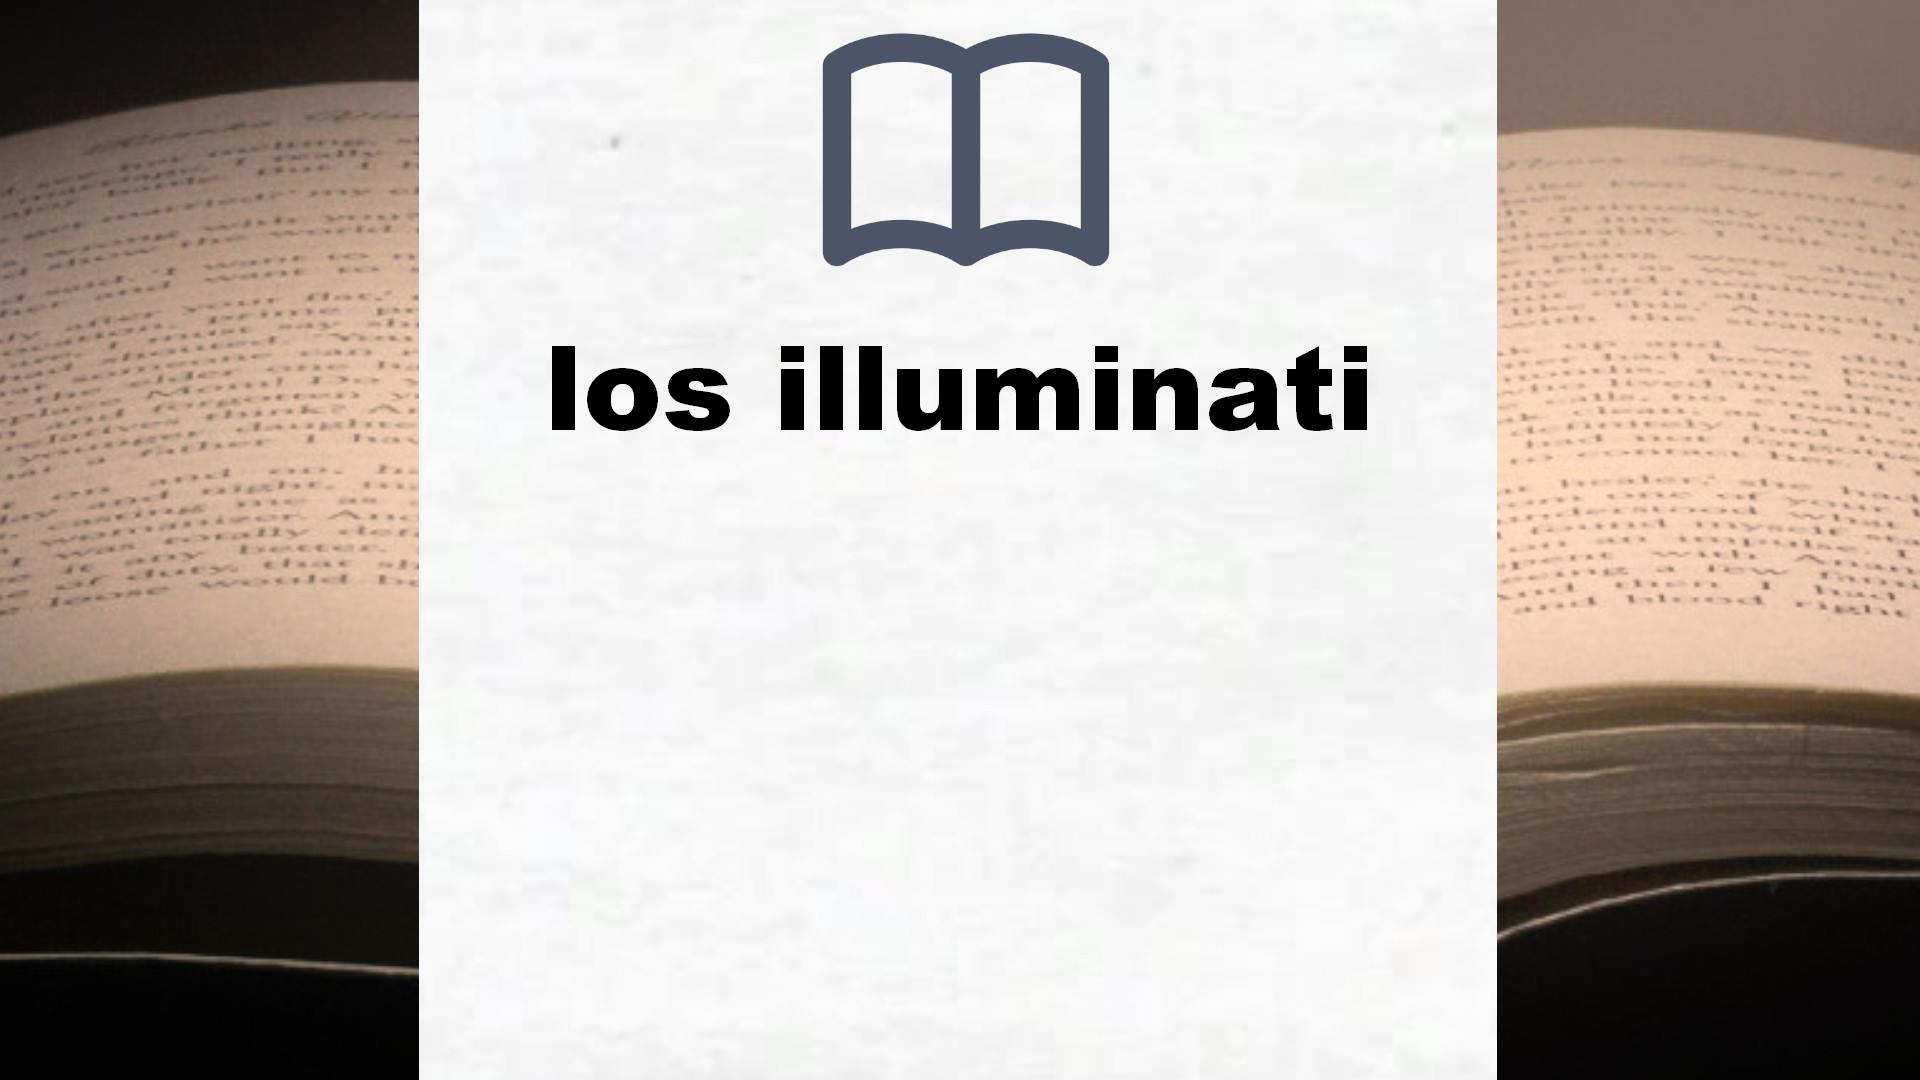 Libros sobre los illuminati